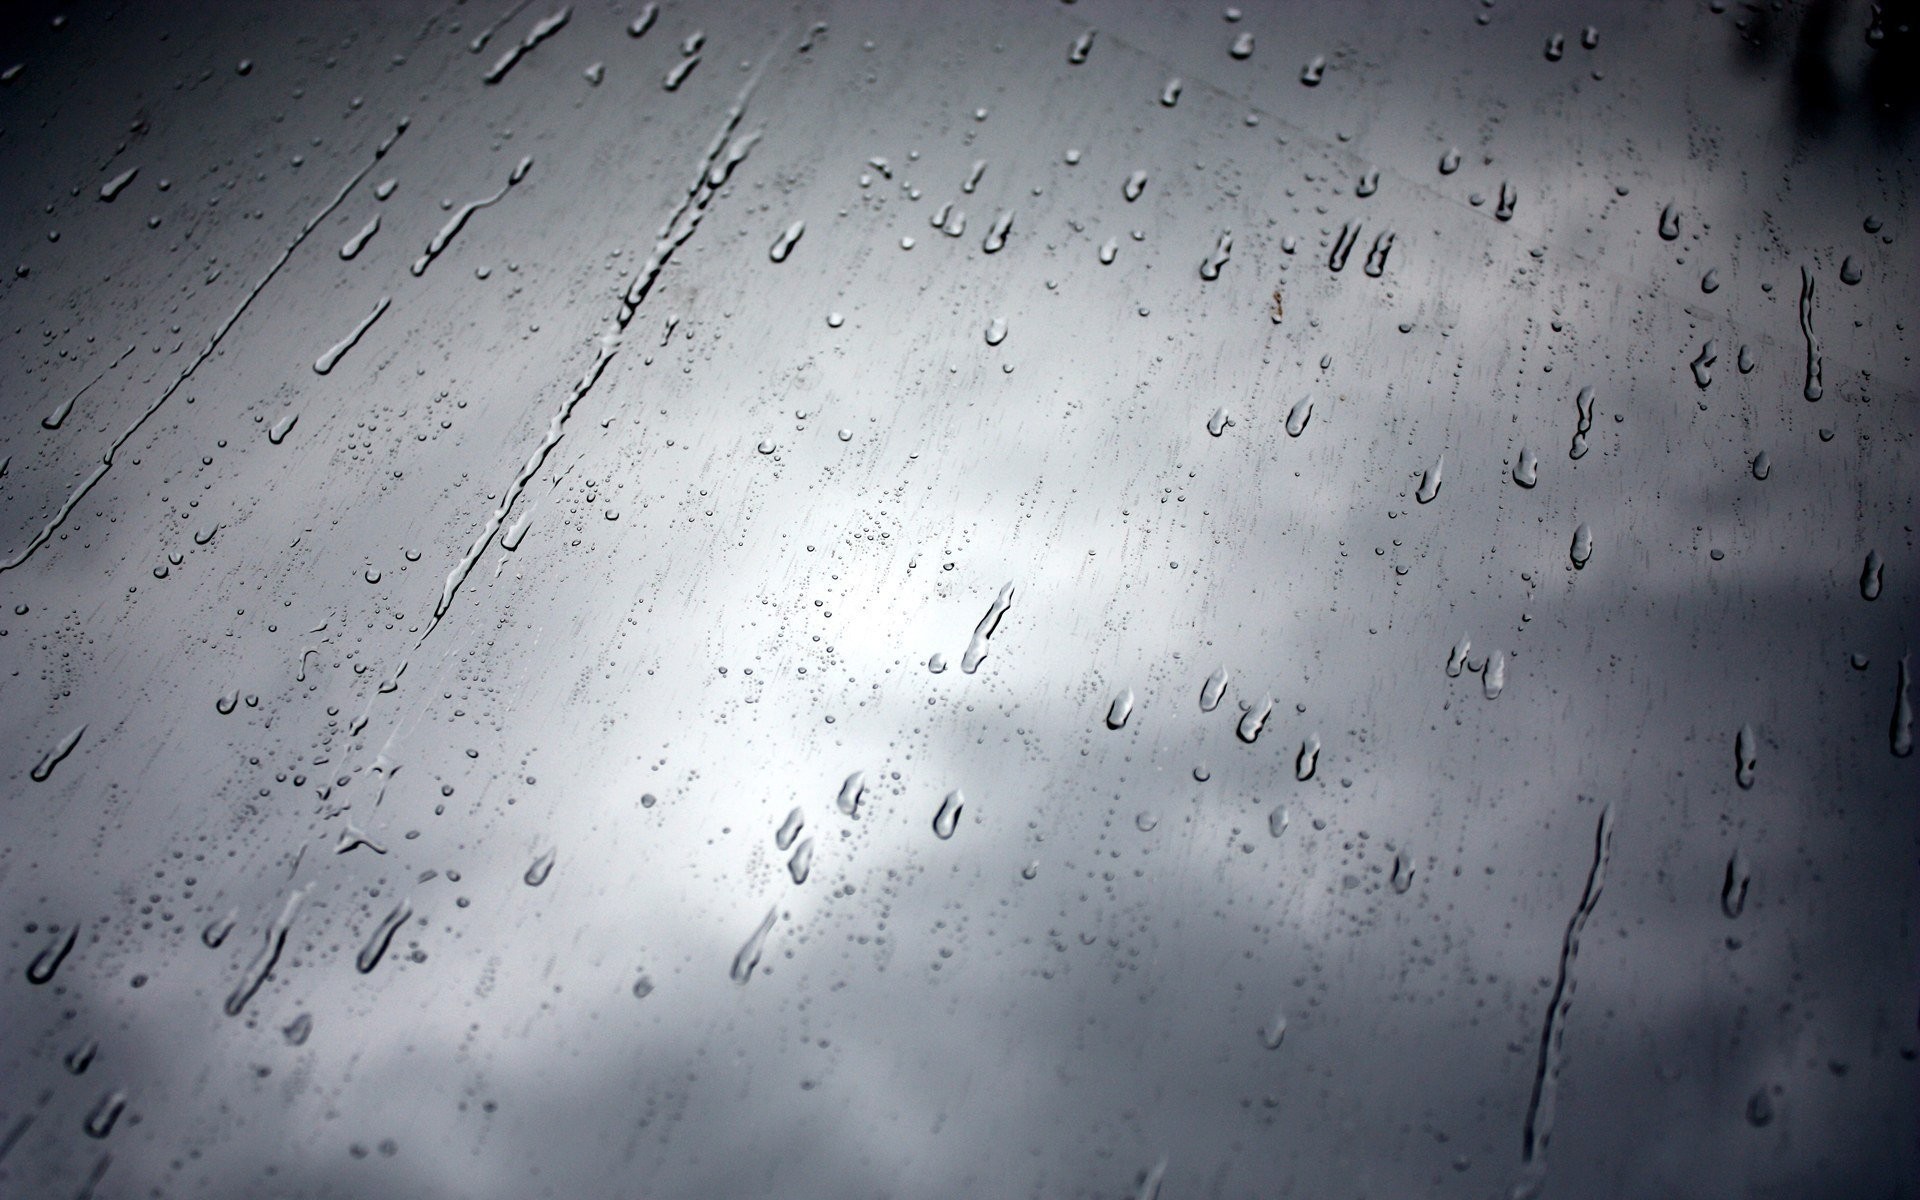 rainy day rain glass window drops sky black and white